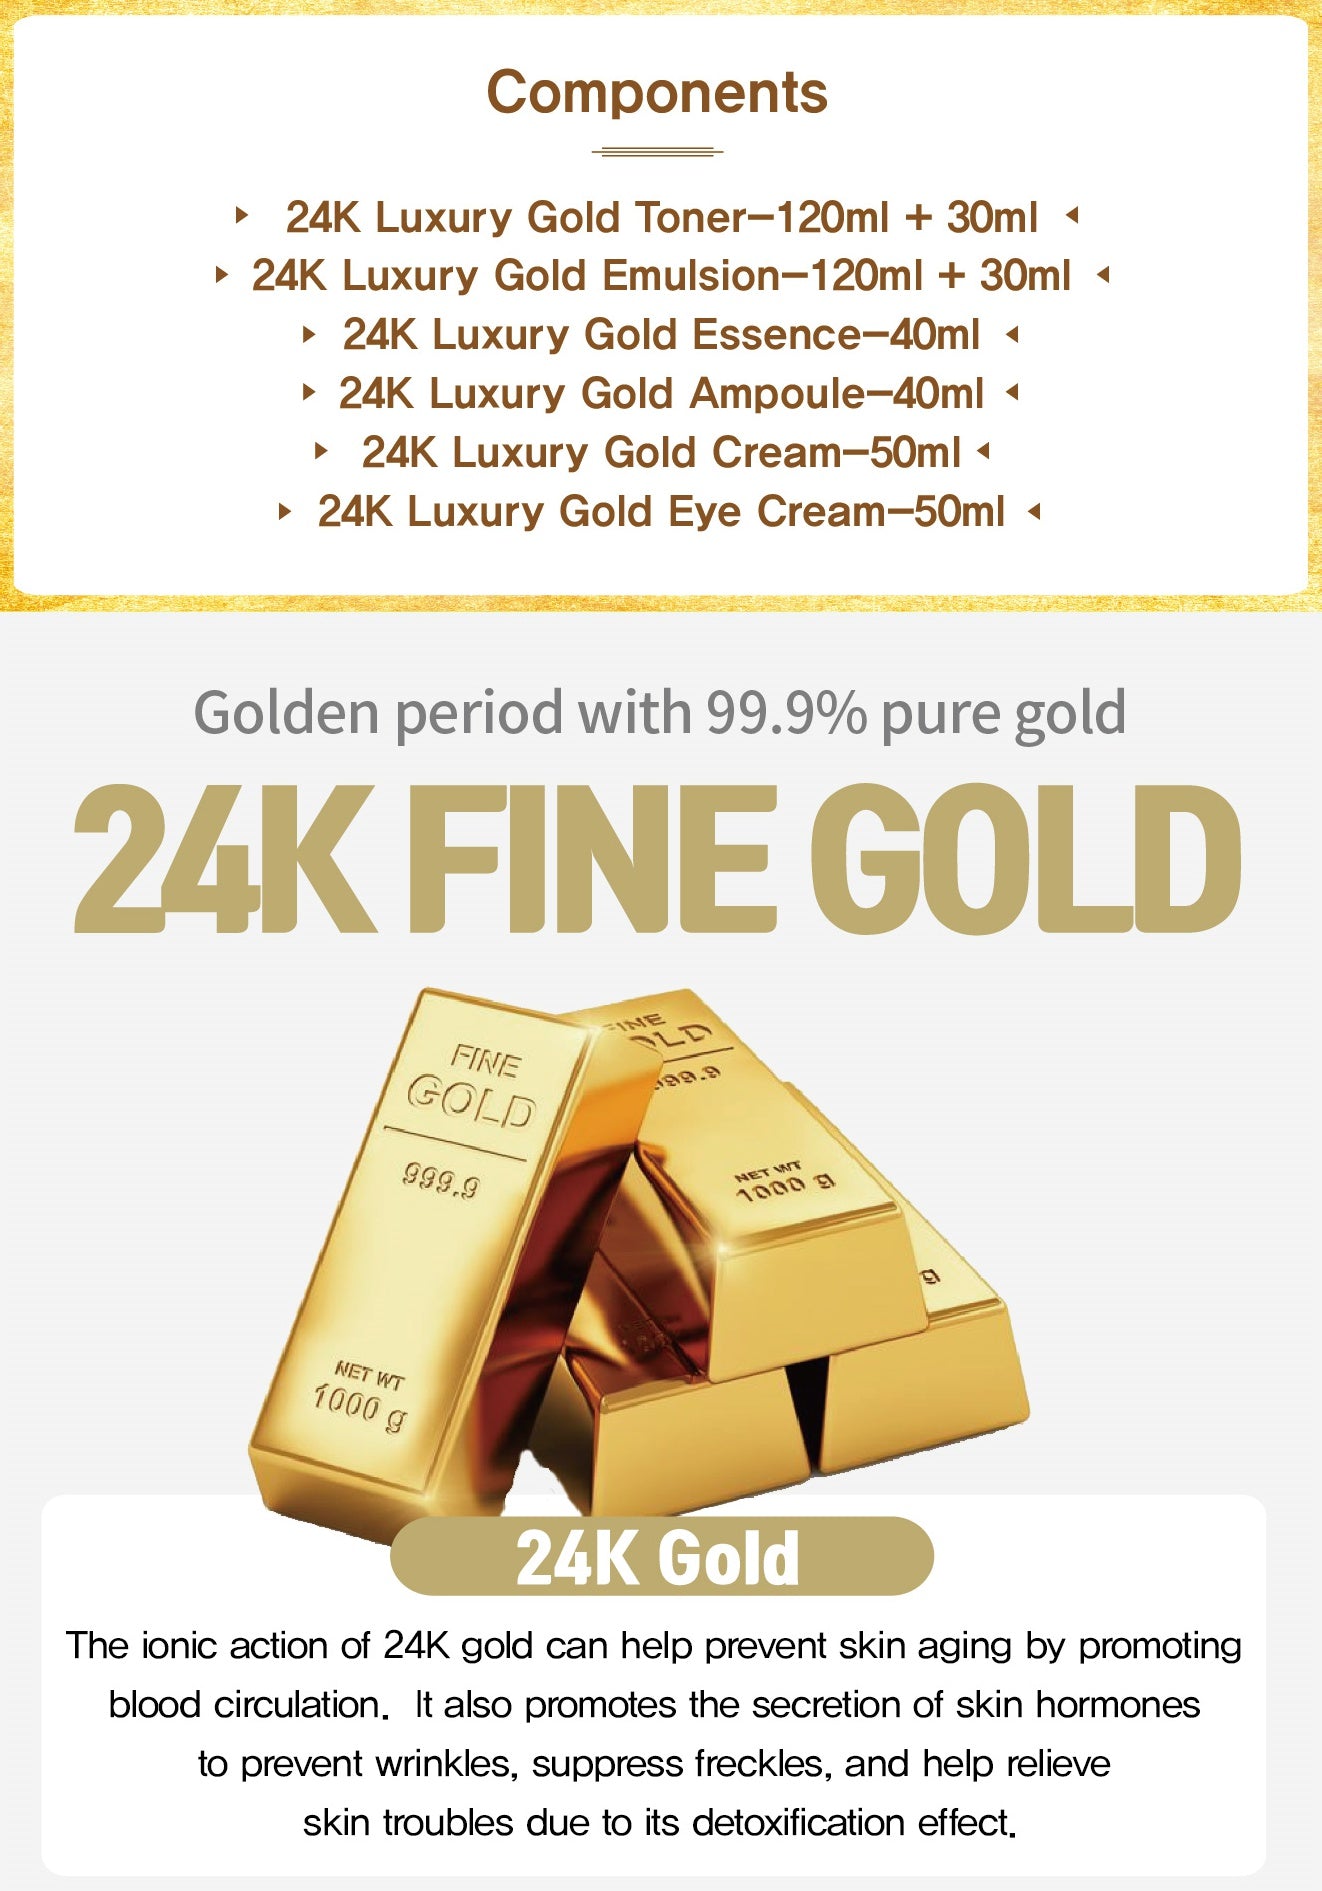 ANJO 24K Gold Skin Care 6 Sets Gifts Korean Womens Anti Aging Wrinkle Cosmetics